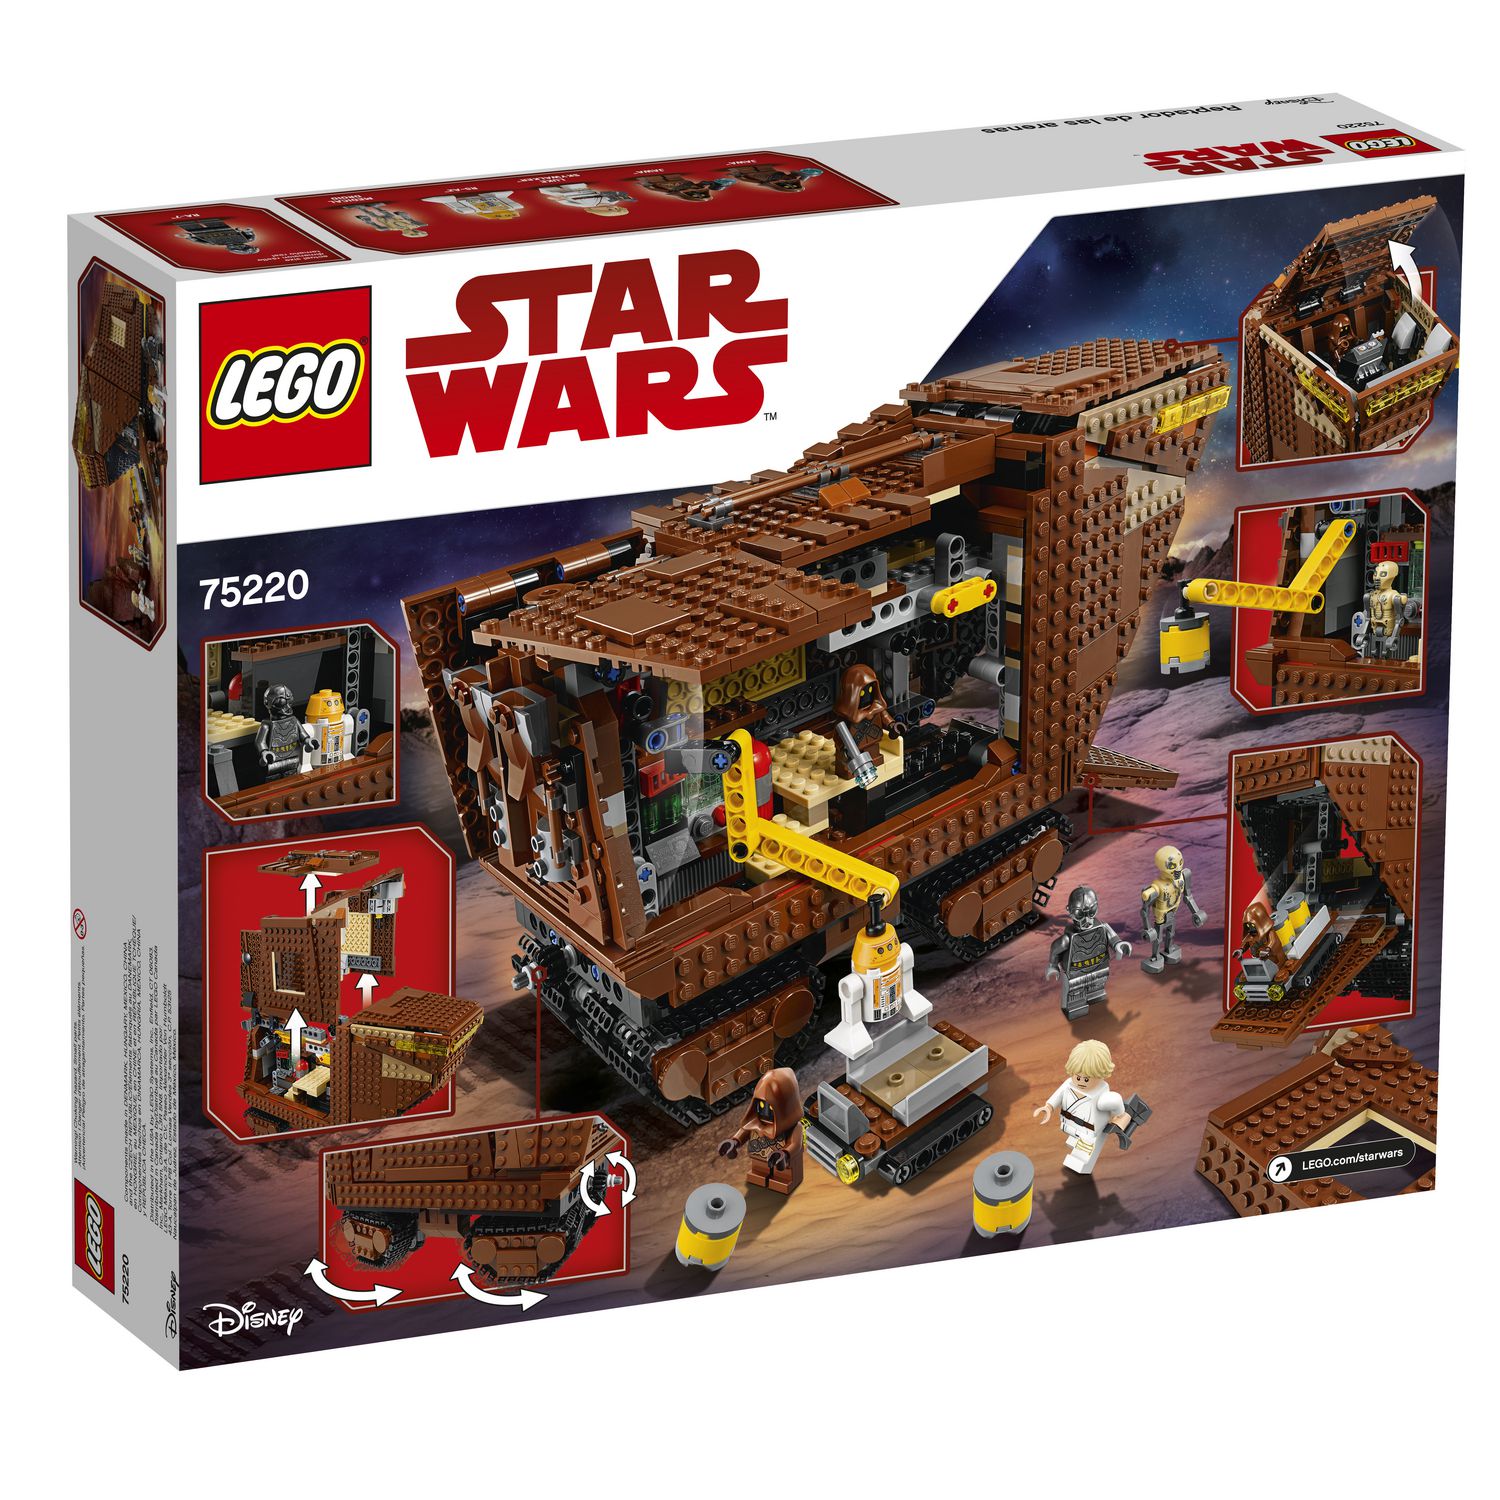 LEGO Star Wars: A New Hope Sandcrawler 75220 Toy Building Kit 